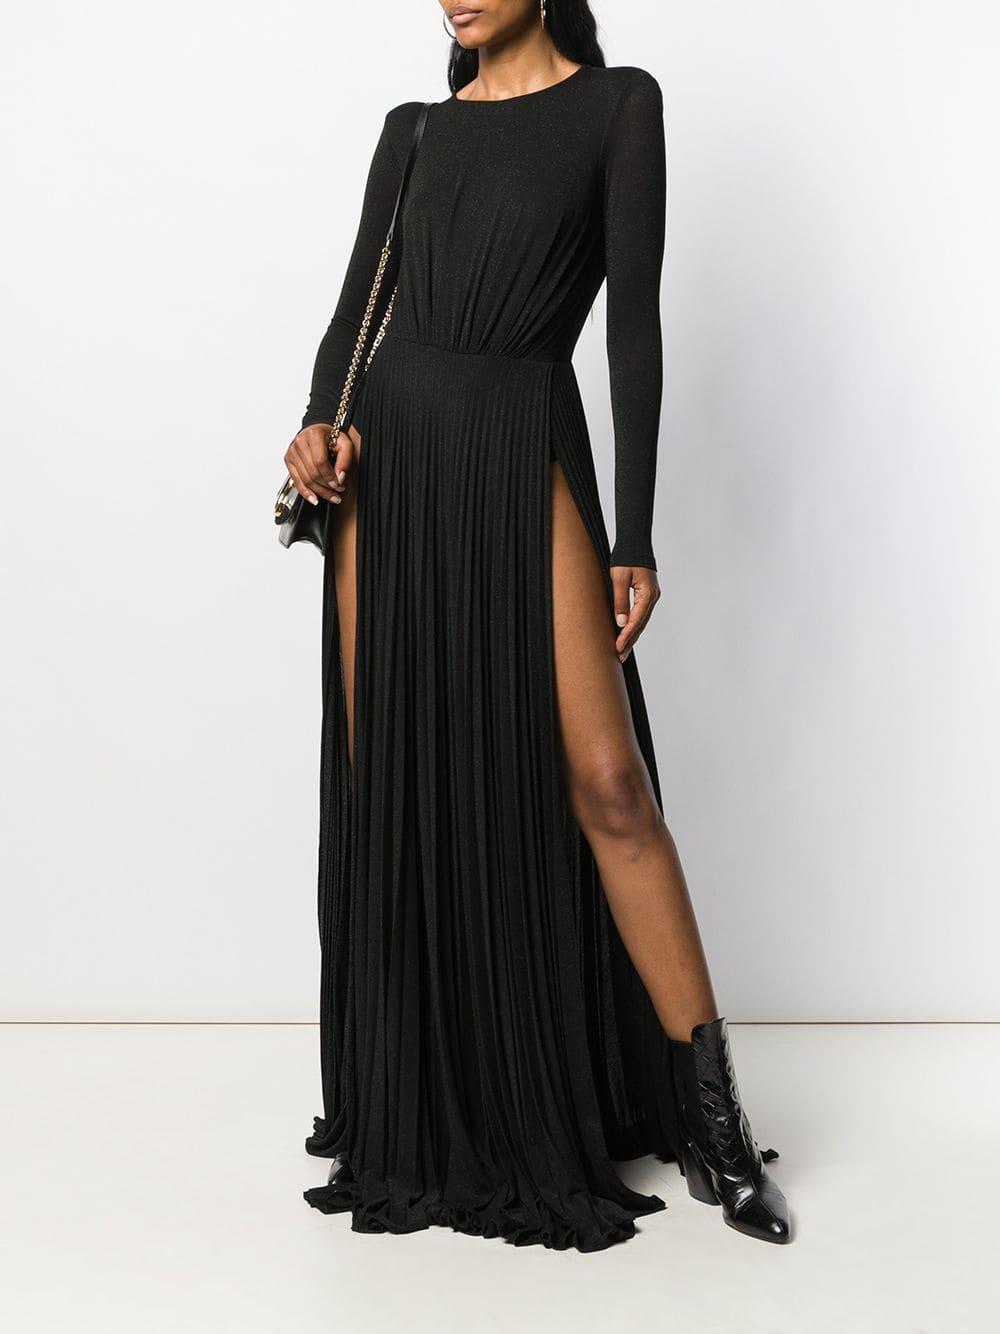 Elisabetta Franchi Synthetic Side Slit Dress in Black | Lyst Australia